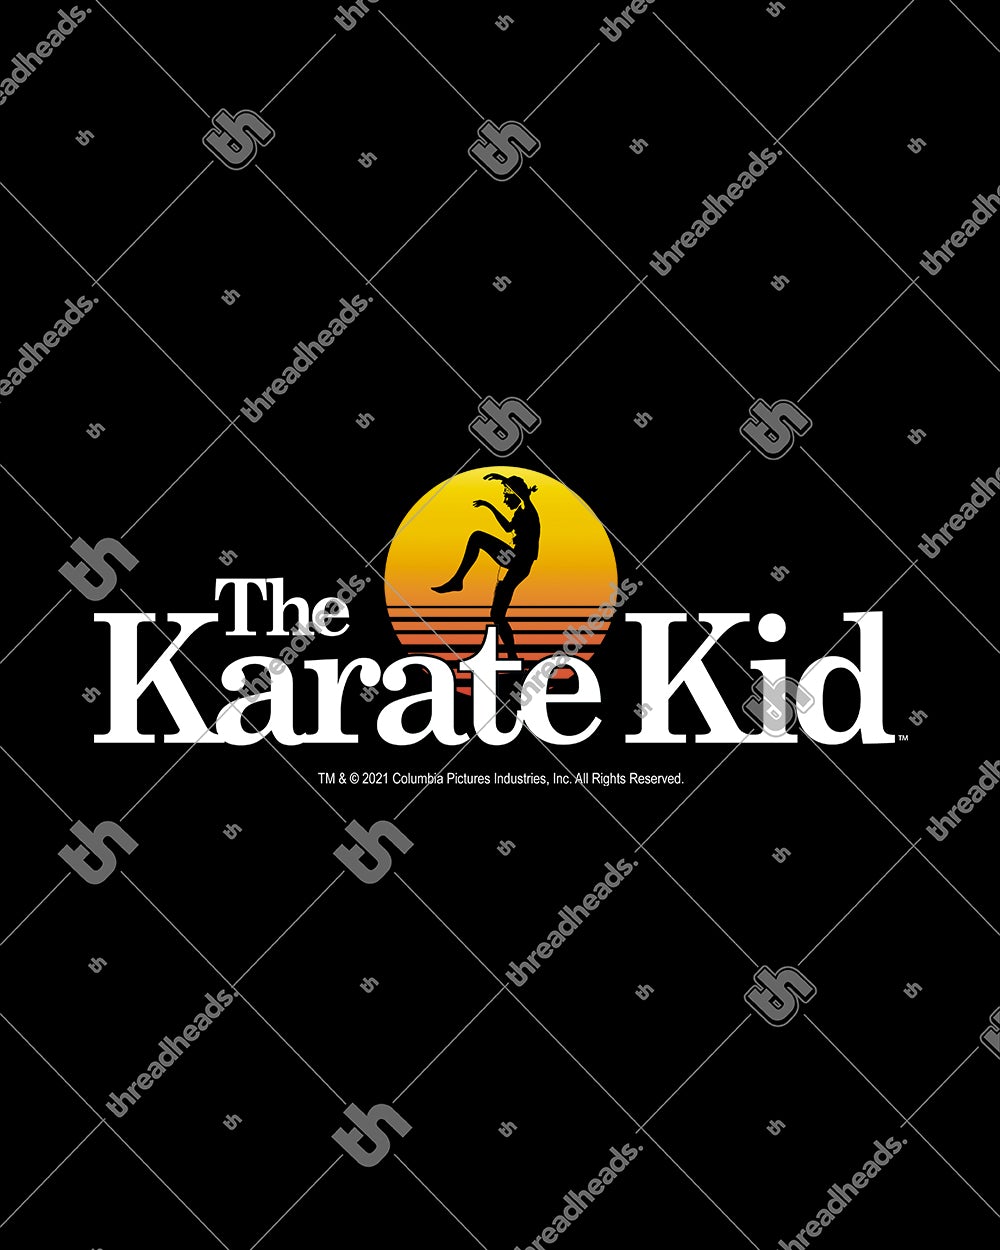 Karate Kid Logo Hoodie Australia Online #colour_black